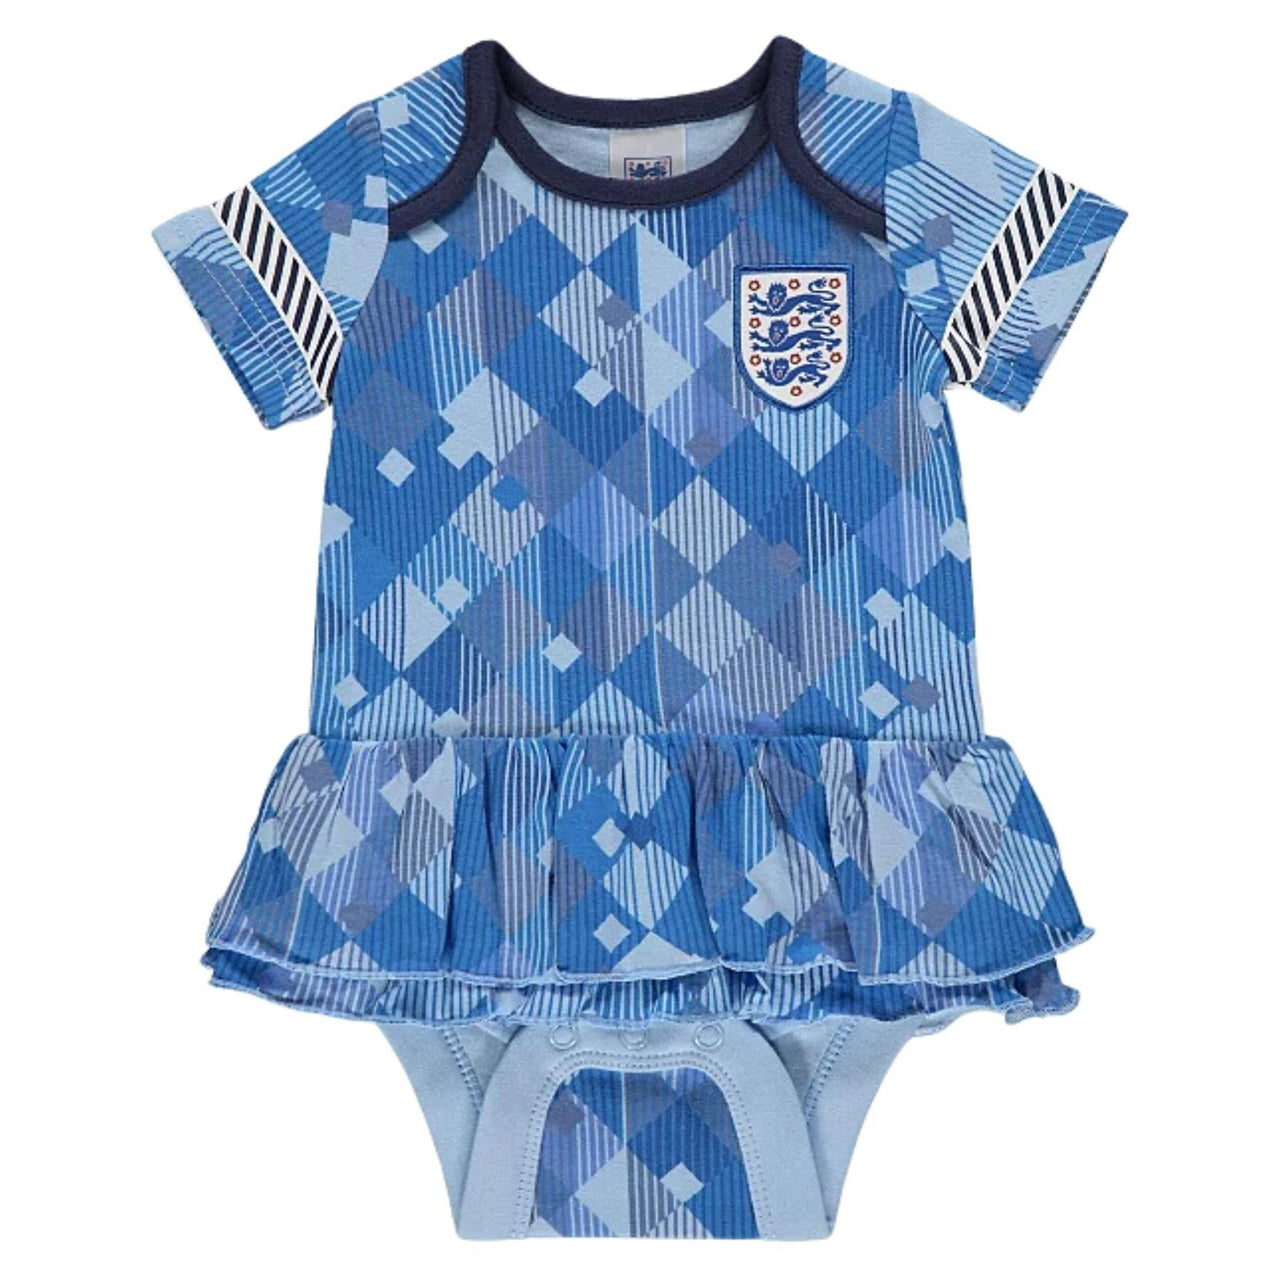 England Football 1990 World Cup Retro Third Baby Girl's Tutu